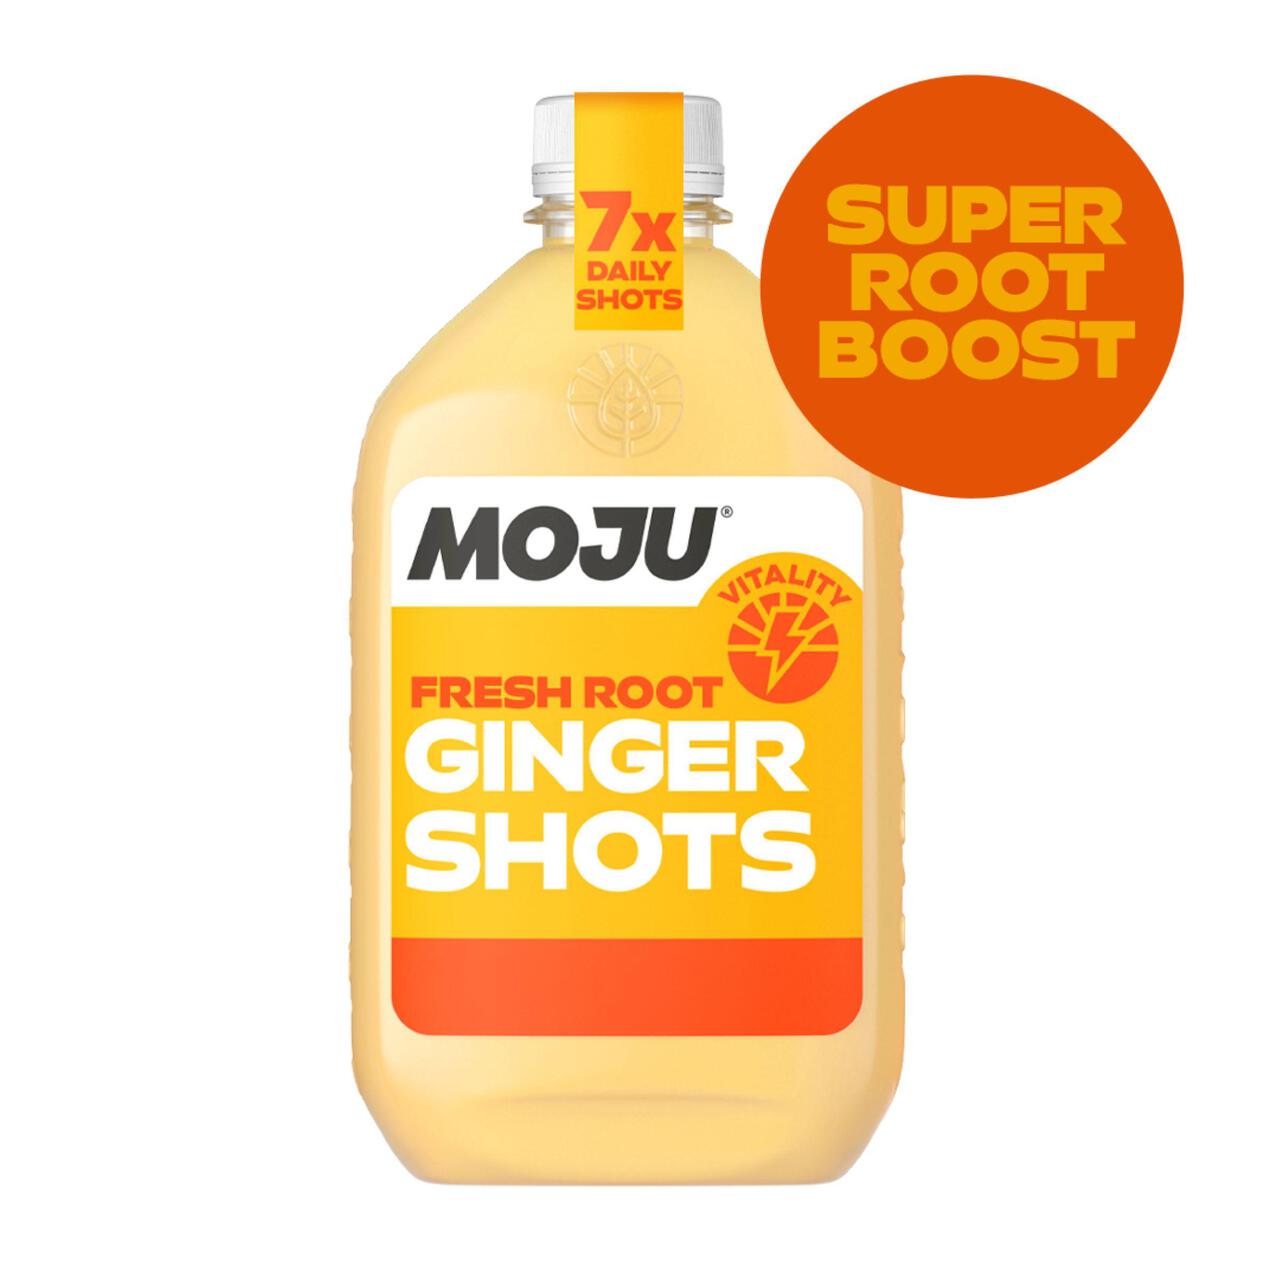 MOJU Ginger Vitality Dosing Bottle 7x Shots 420ml